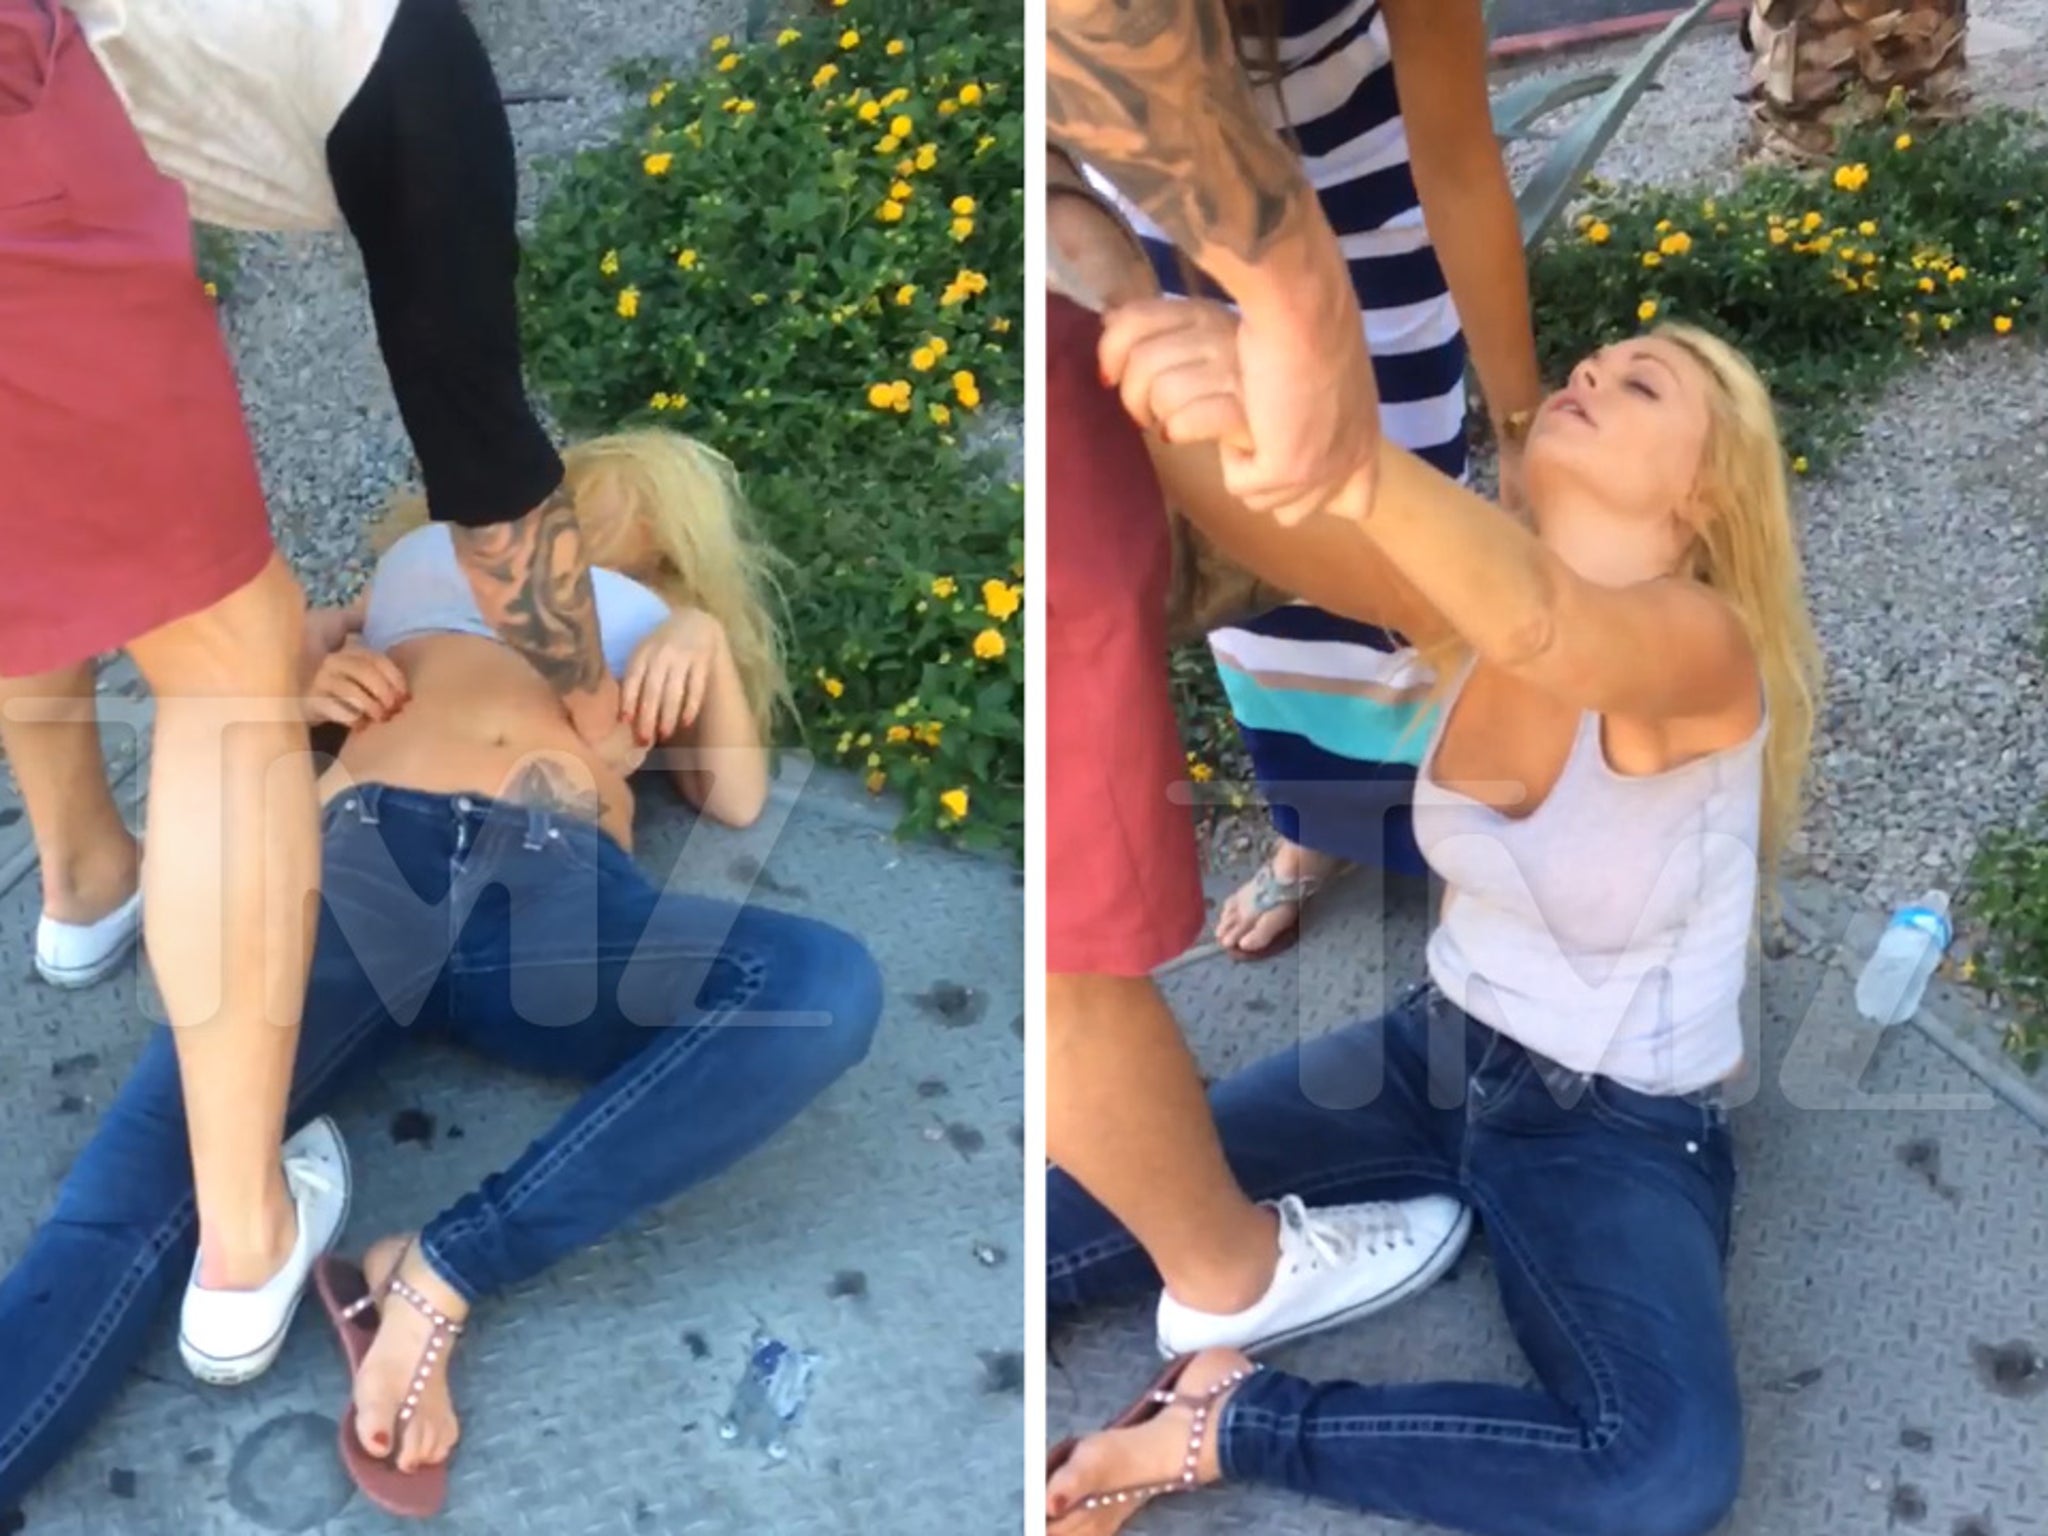 drunken amateur women take strippers club Adult Pics Hq